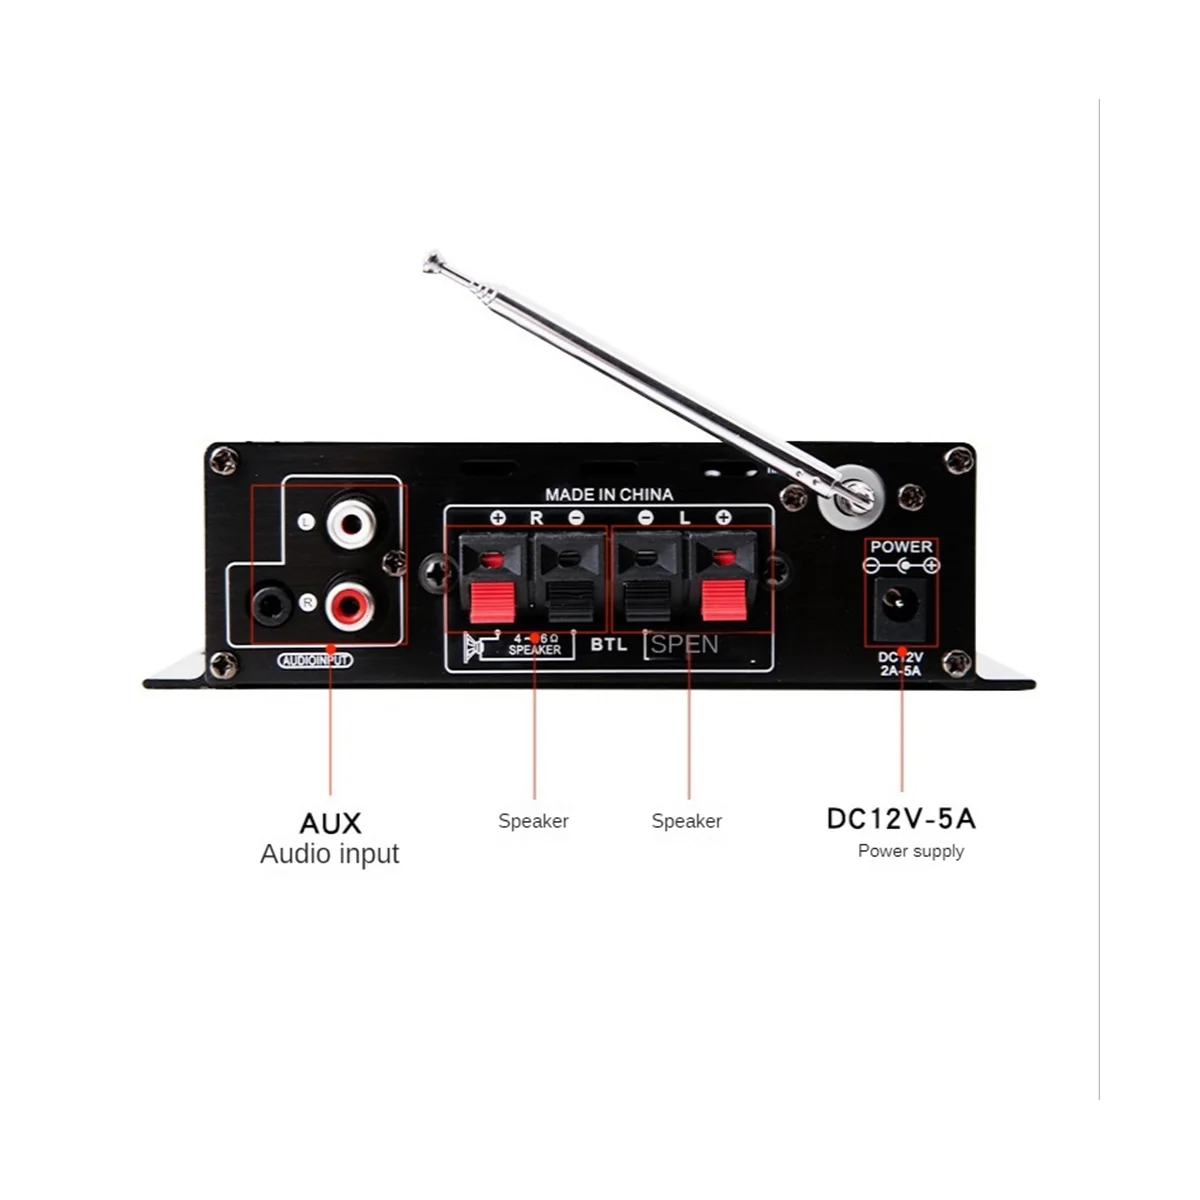 

AK380 Hifi Audio Home Digital Amplifiers Car Audio Bass Power Bluetooth Amplifier FM USB SD Radio Subwoofer Speakers